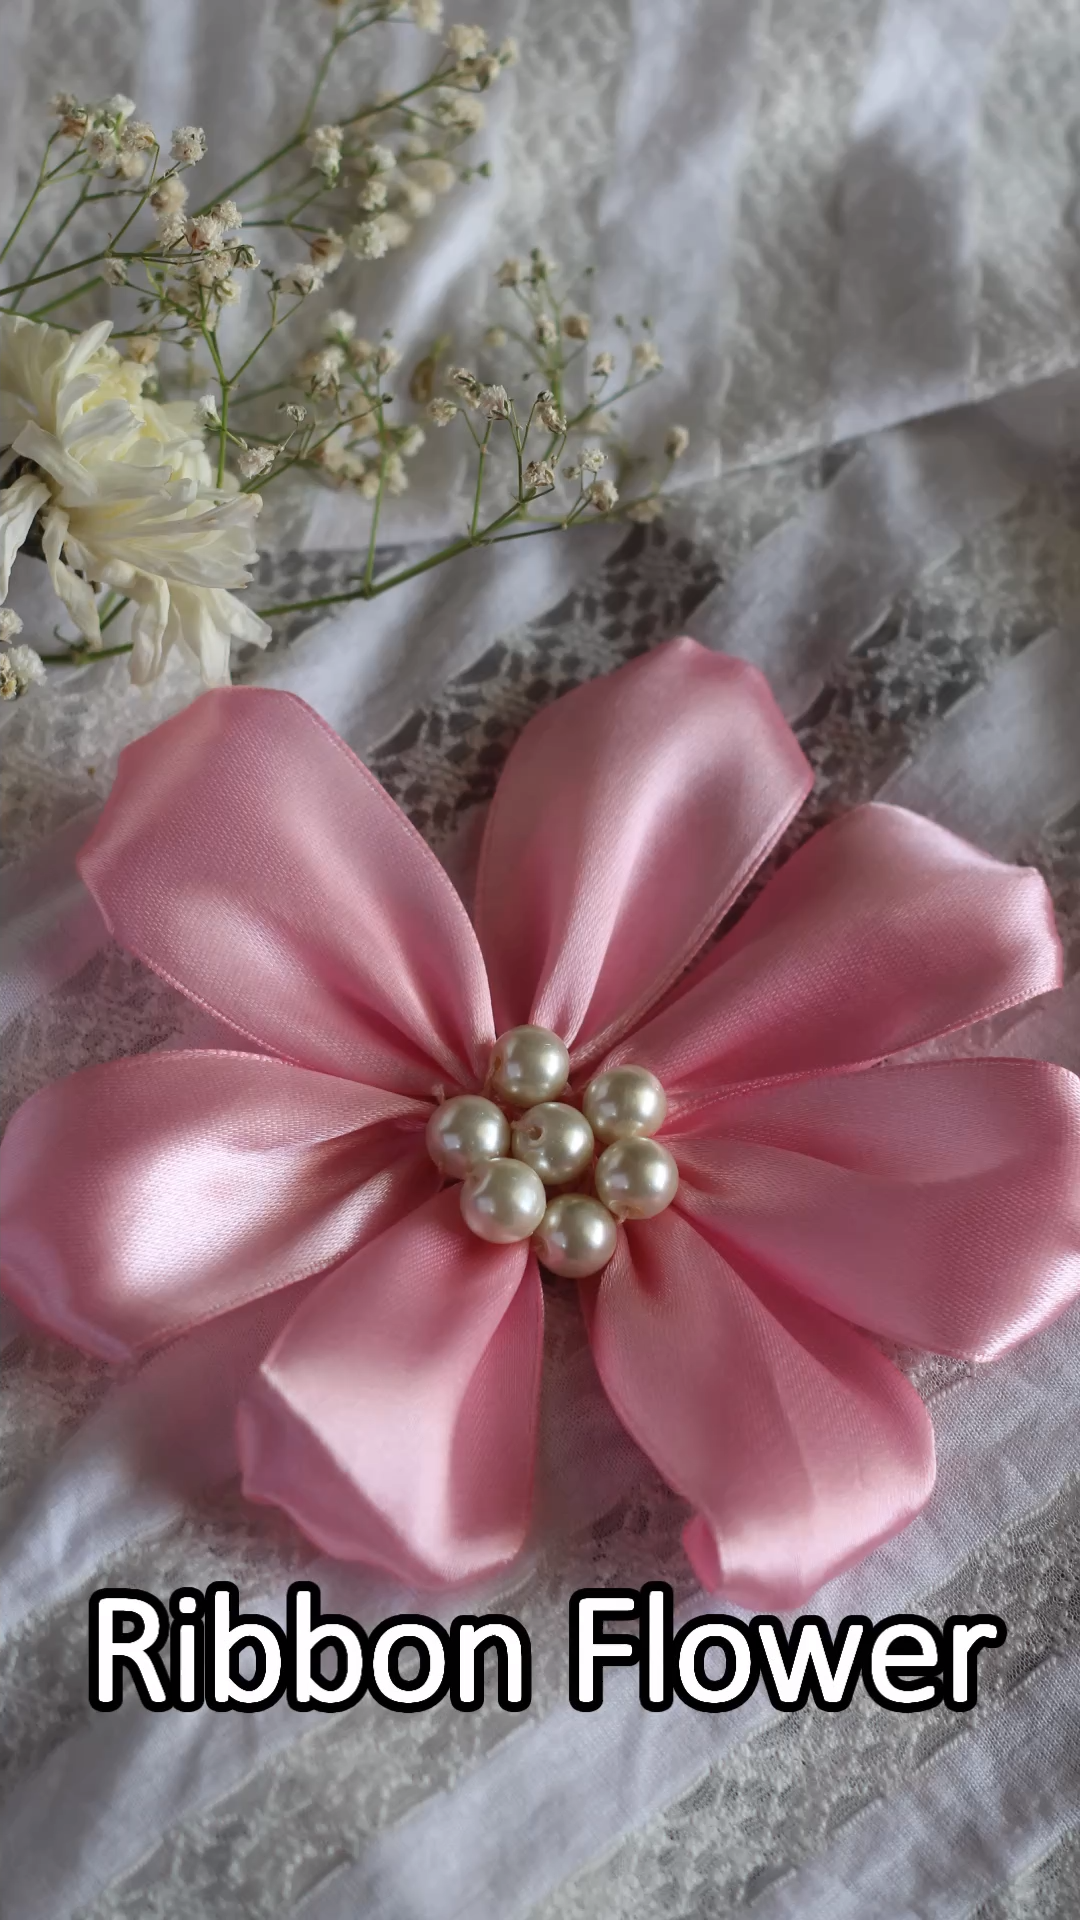 Ribbon Flower -   21 fabric crafts Videos flowers ideas